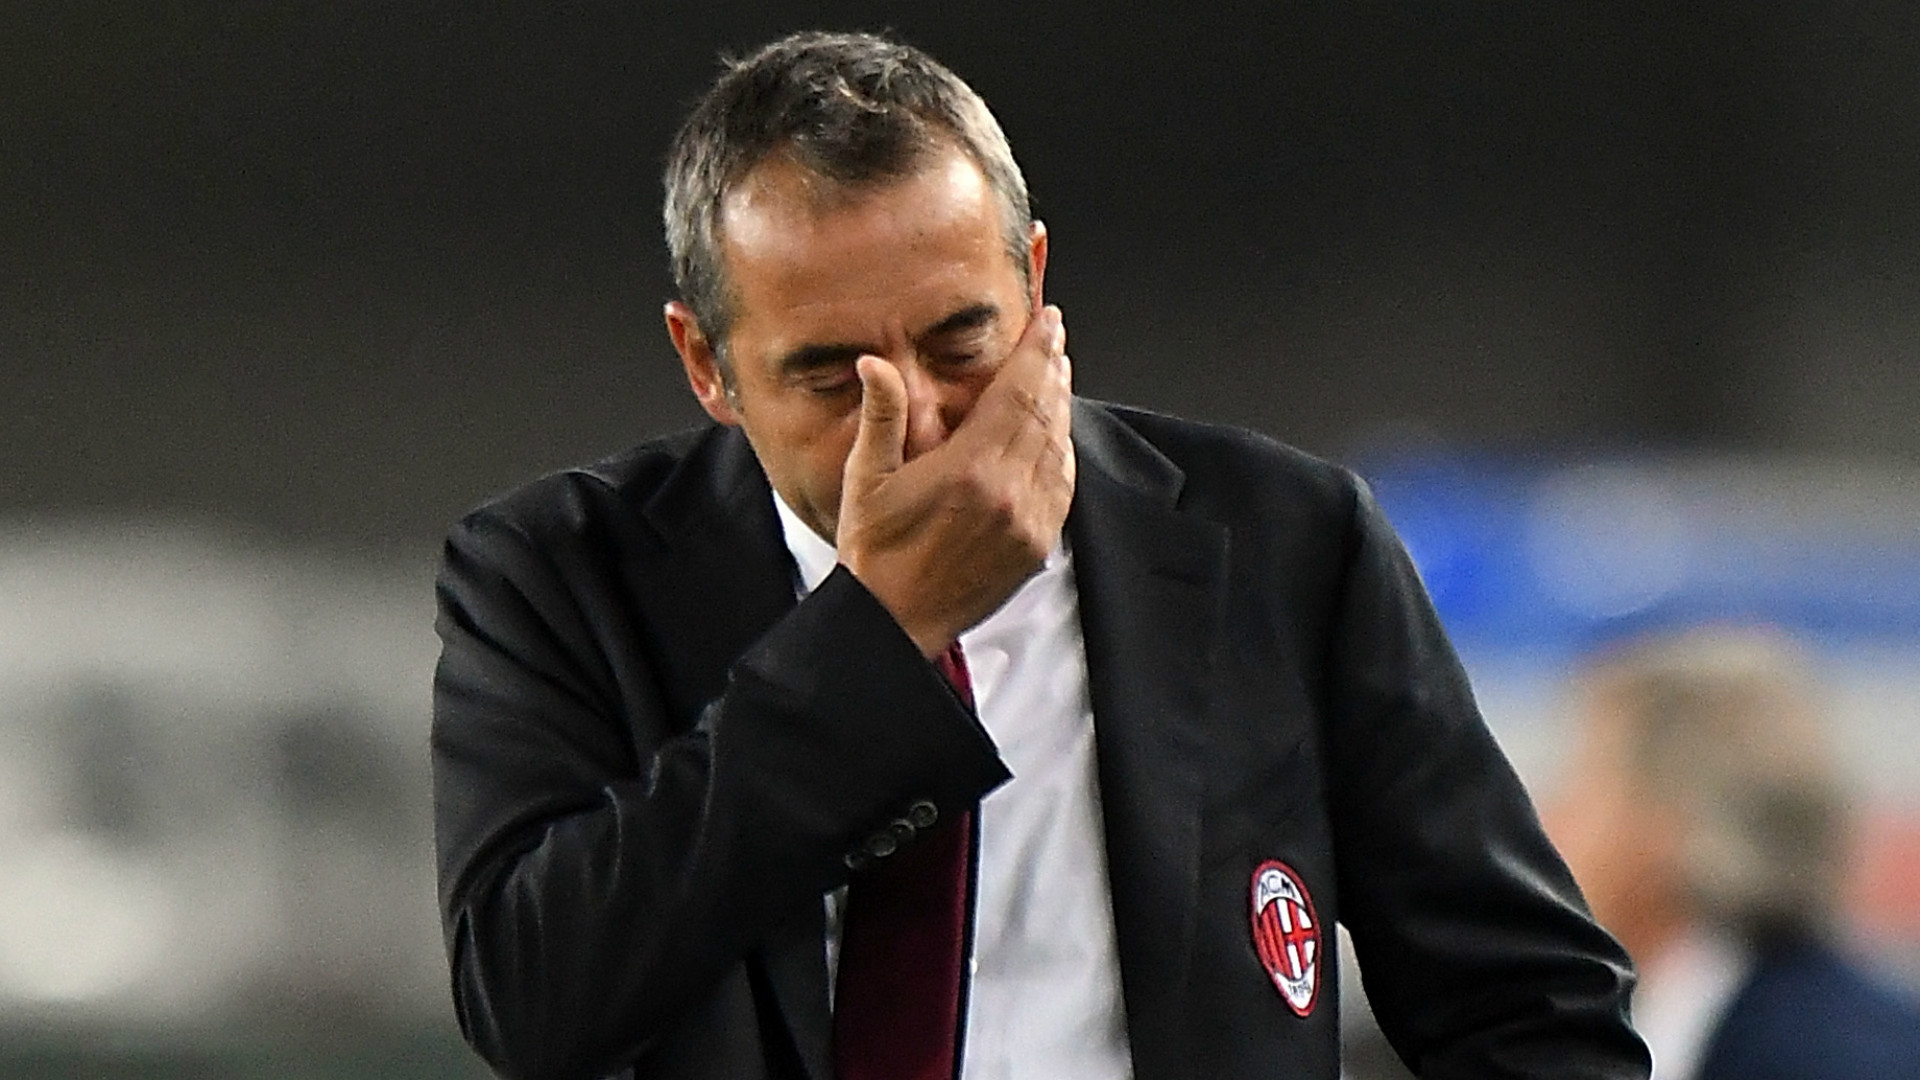 AC Milan Sack Coach Giampaolo, Appoint Pioli To Take Over